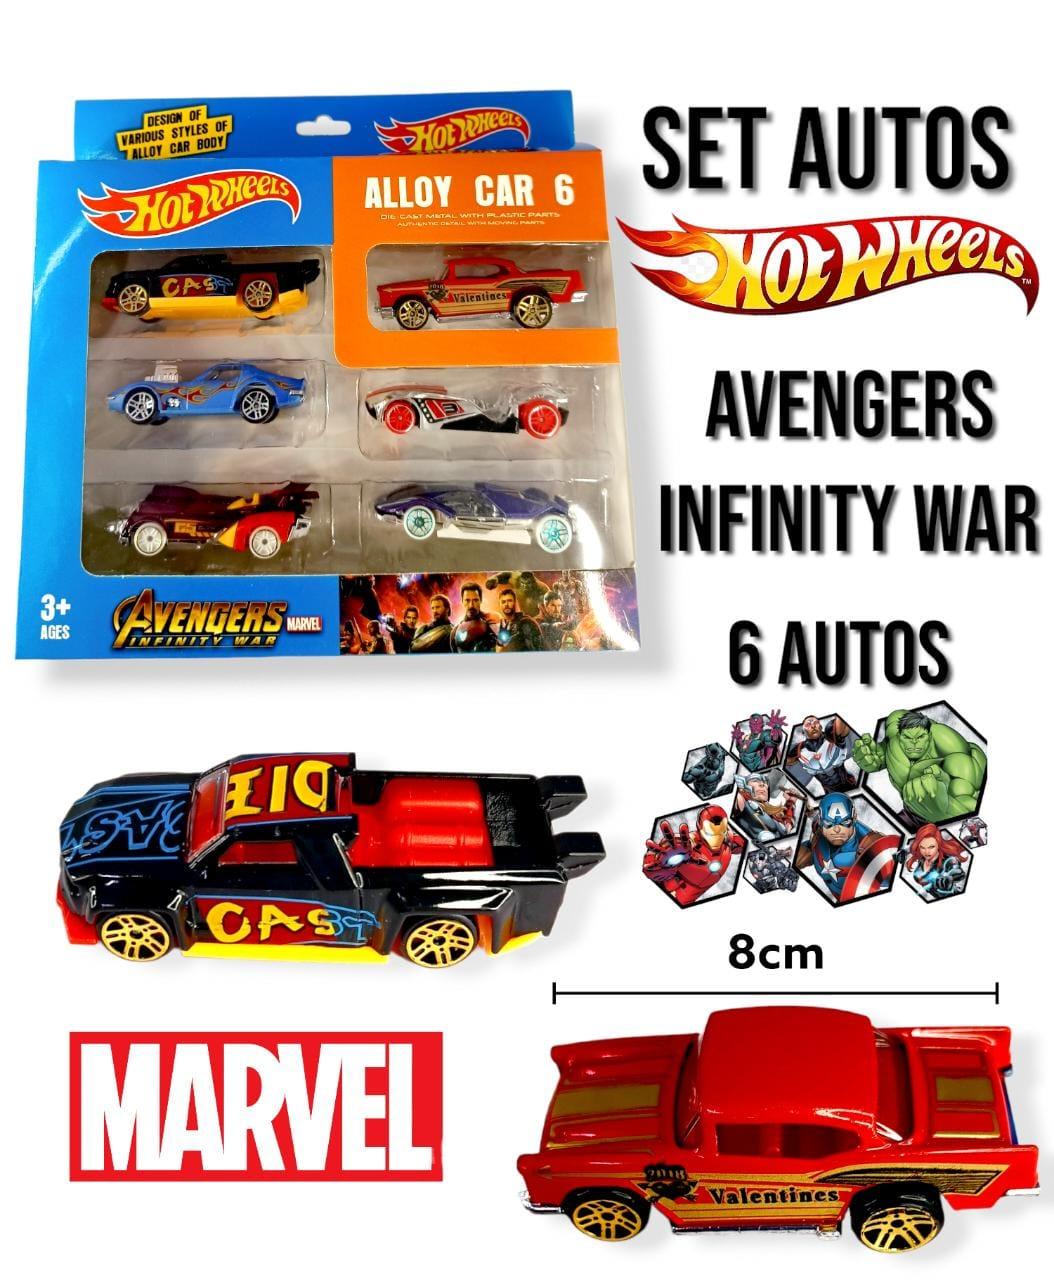 Set Autos x 6 Hot Wheels (Avengers Infinity war)  MARVEL 8cm